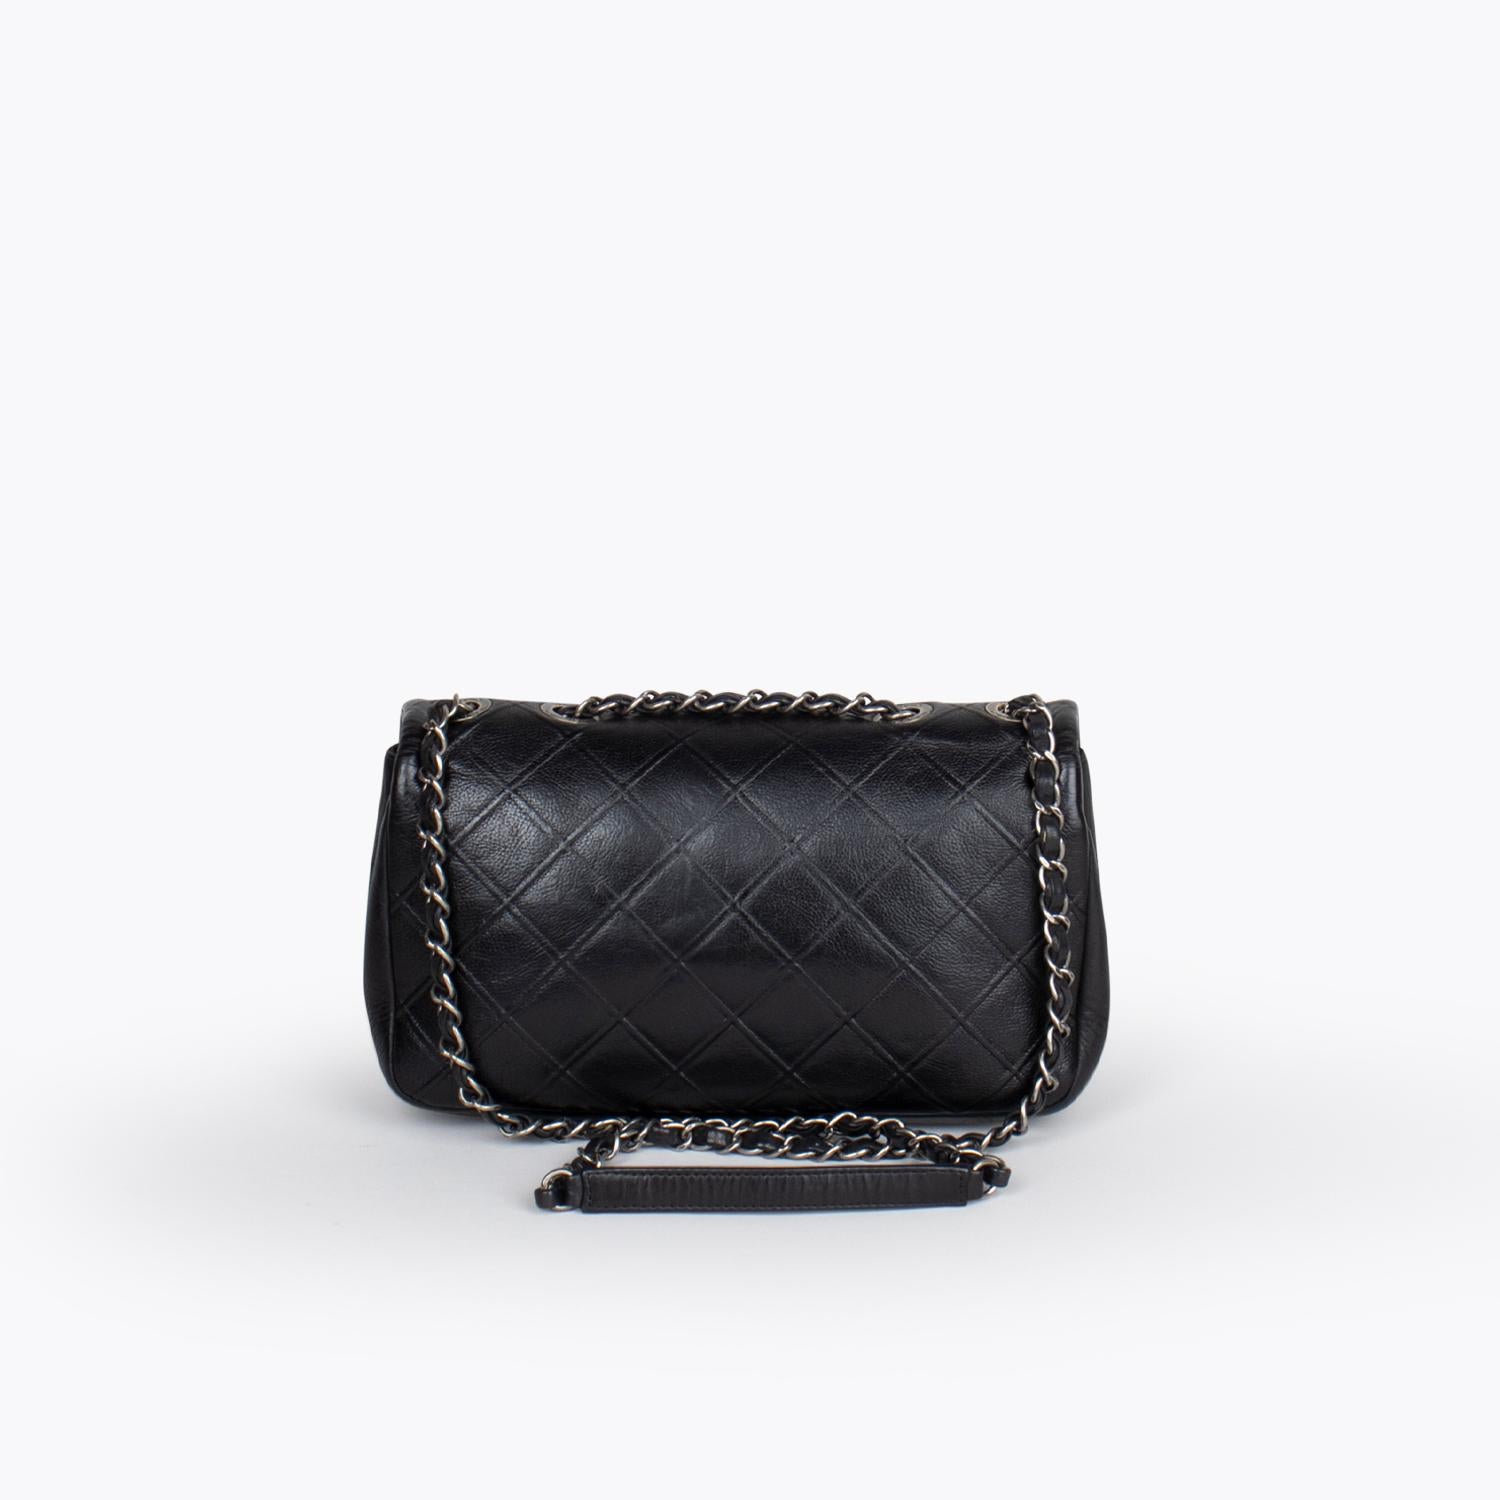 Black Chanel Cambon Single Flap Bag